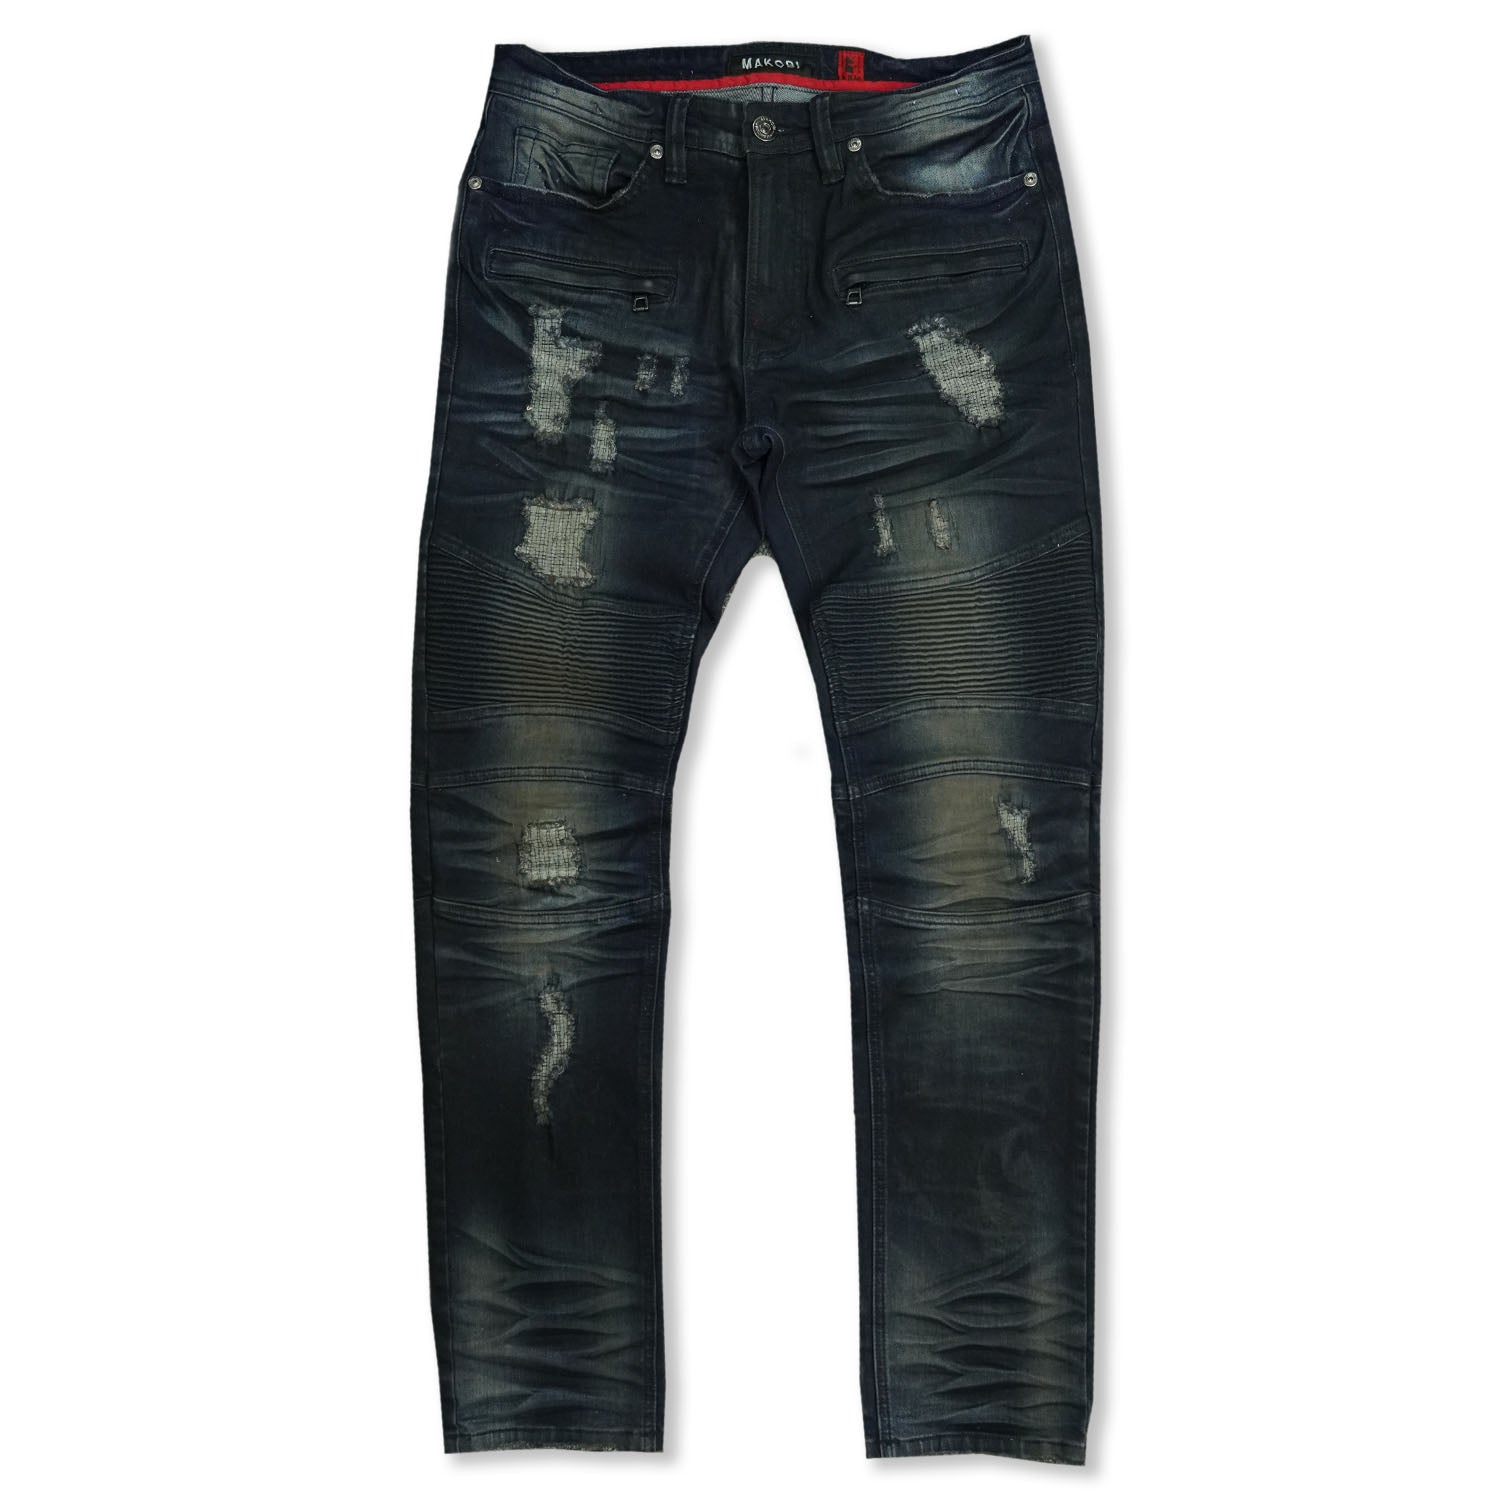 M1786 Makobi Prado Biker Jeans pẹlu Rip & Tunṣe - Ojoun Wẹ